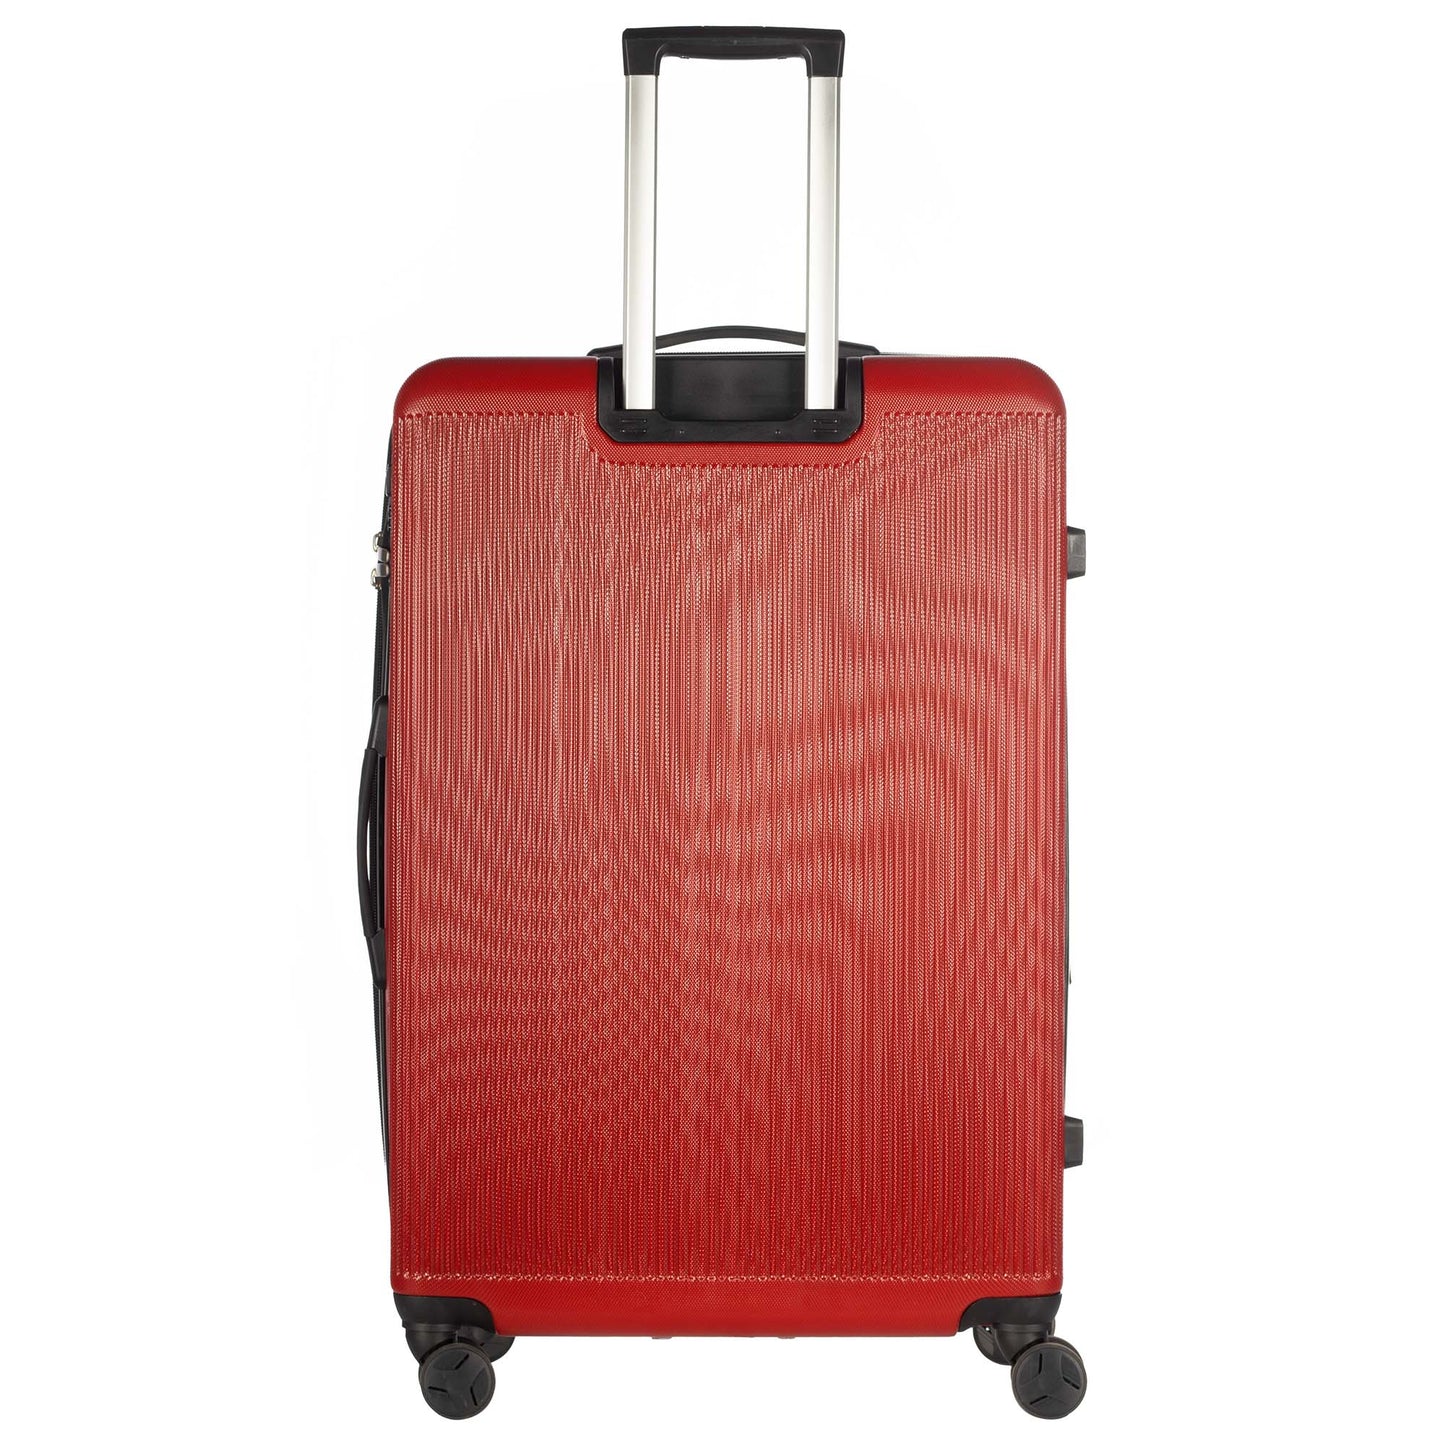 Hardhead Nasa JFK Collection Red Luggage (21/25/29") Suitcase Lock Spinner Hardshell